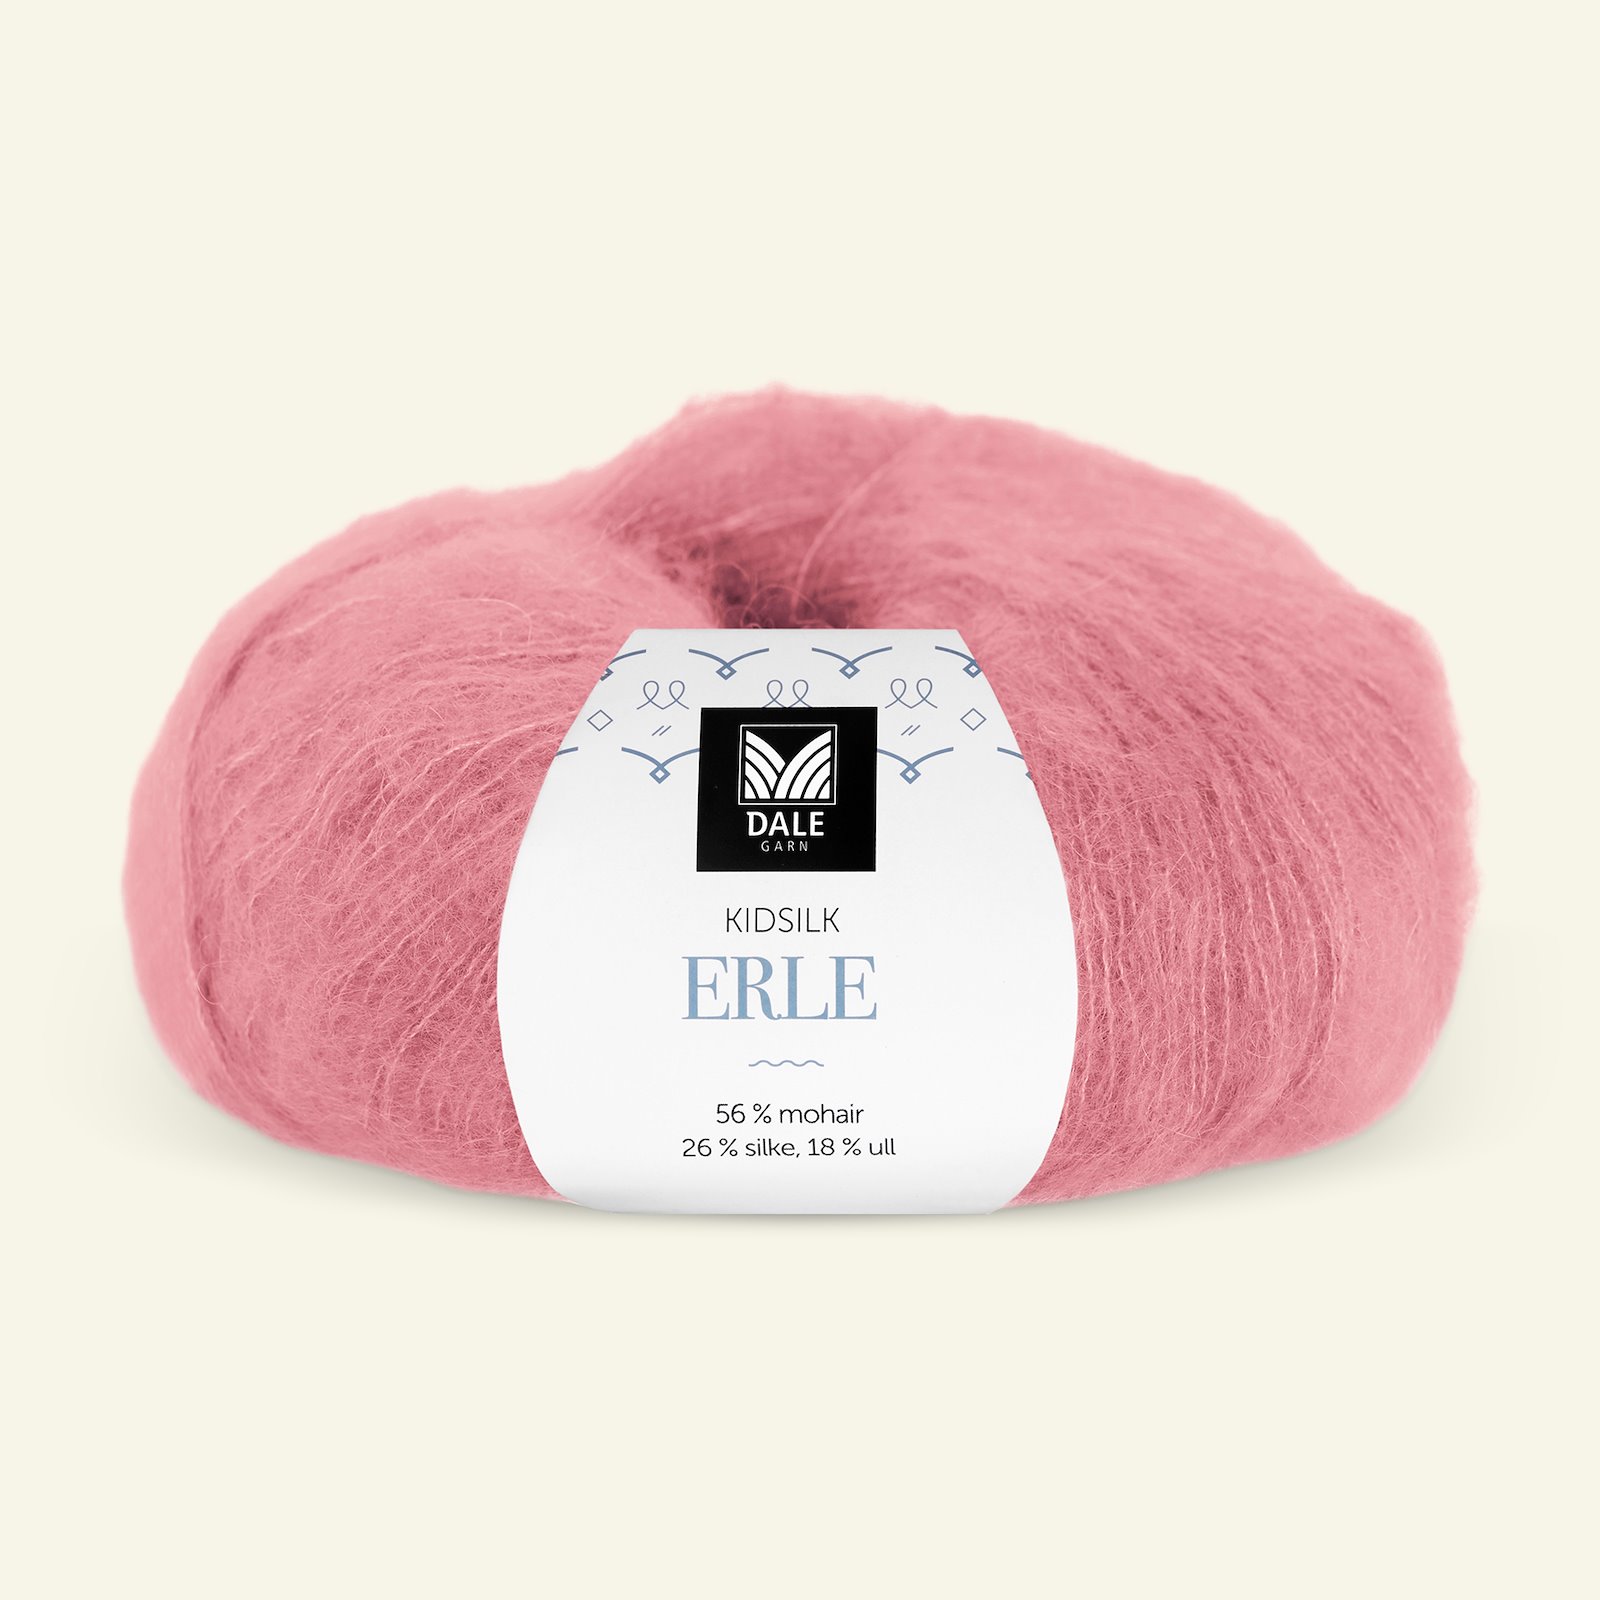 Dale Garn, silk mohair wool yarn "Kidsilk Erle", dusty pink (9044) 90000789_pack